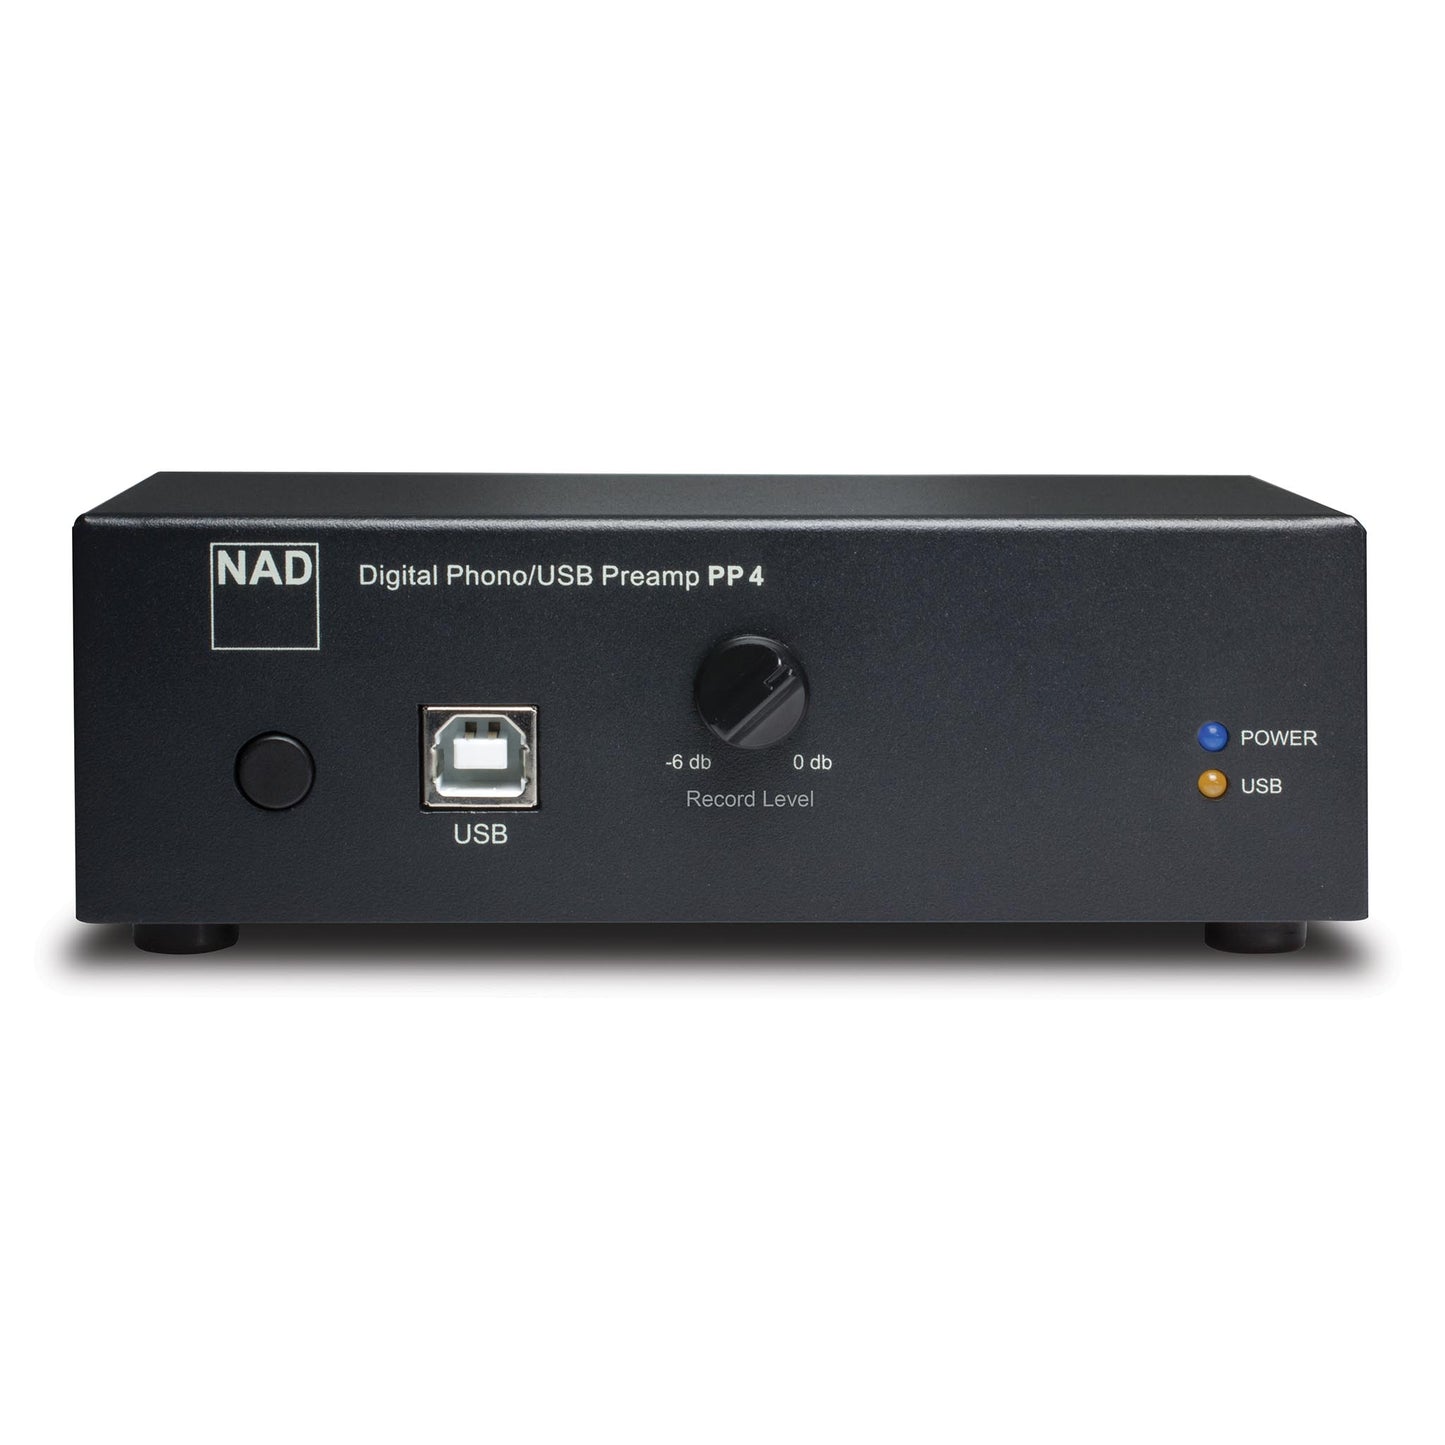 NAD PP4 Digital Phono / USB Preamp